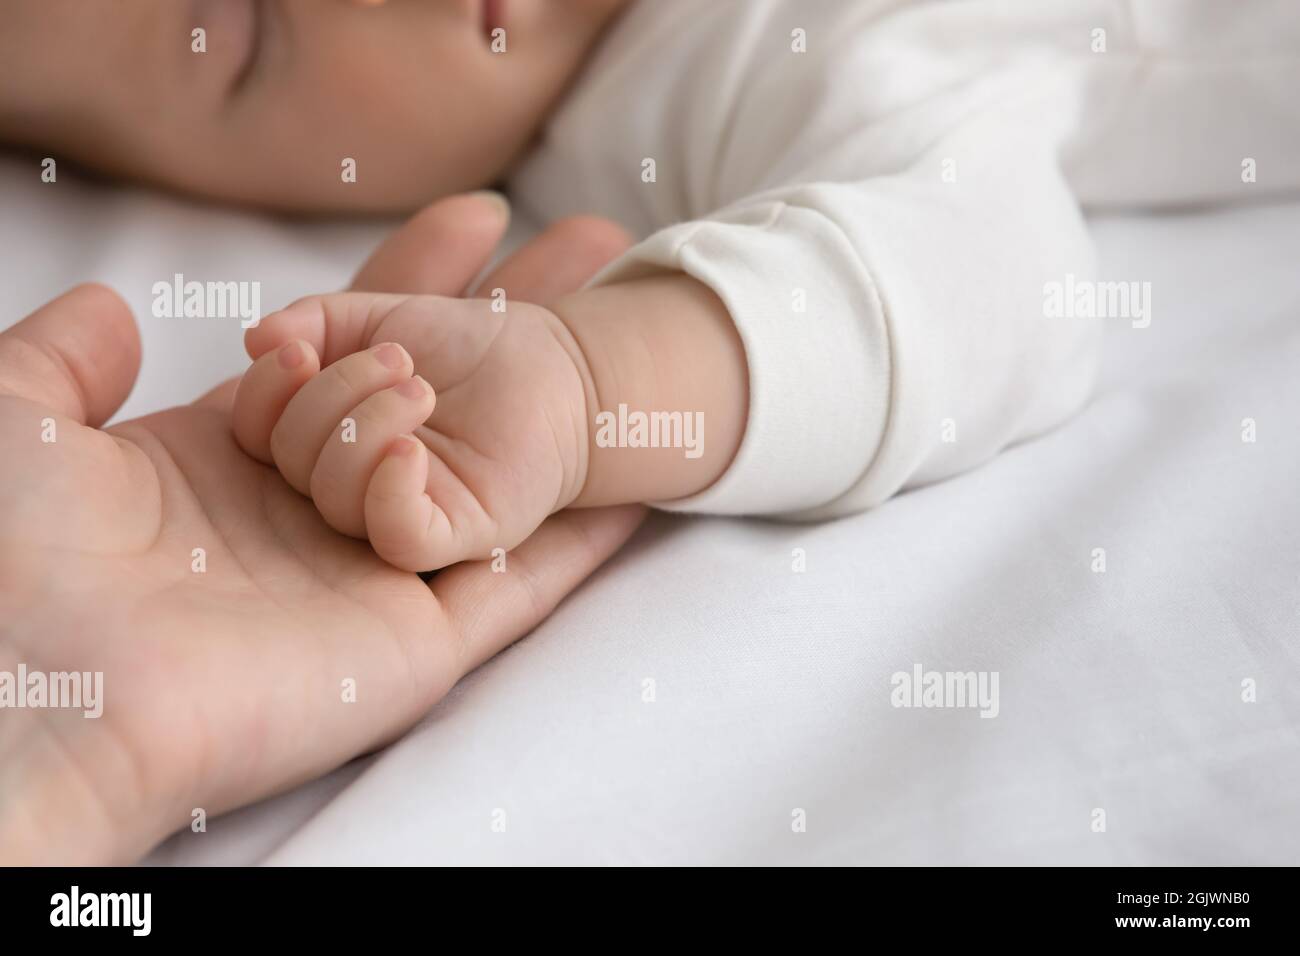 New mom and newborn baby hands close up Stock Photo